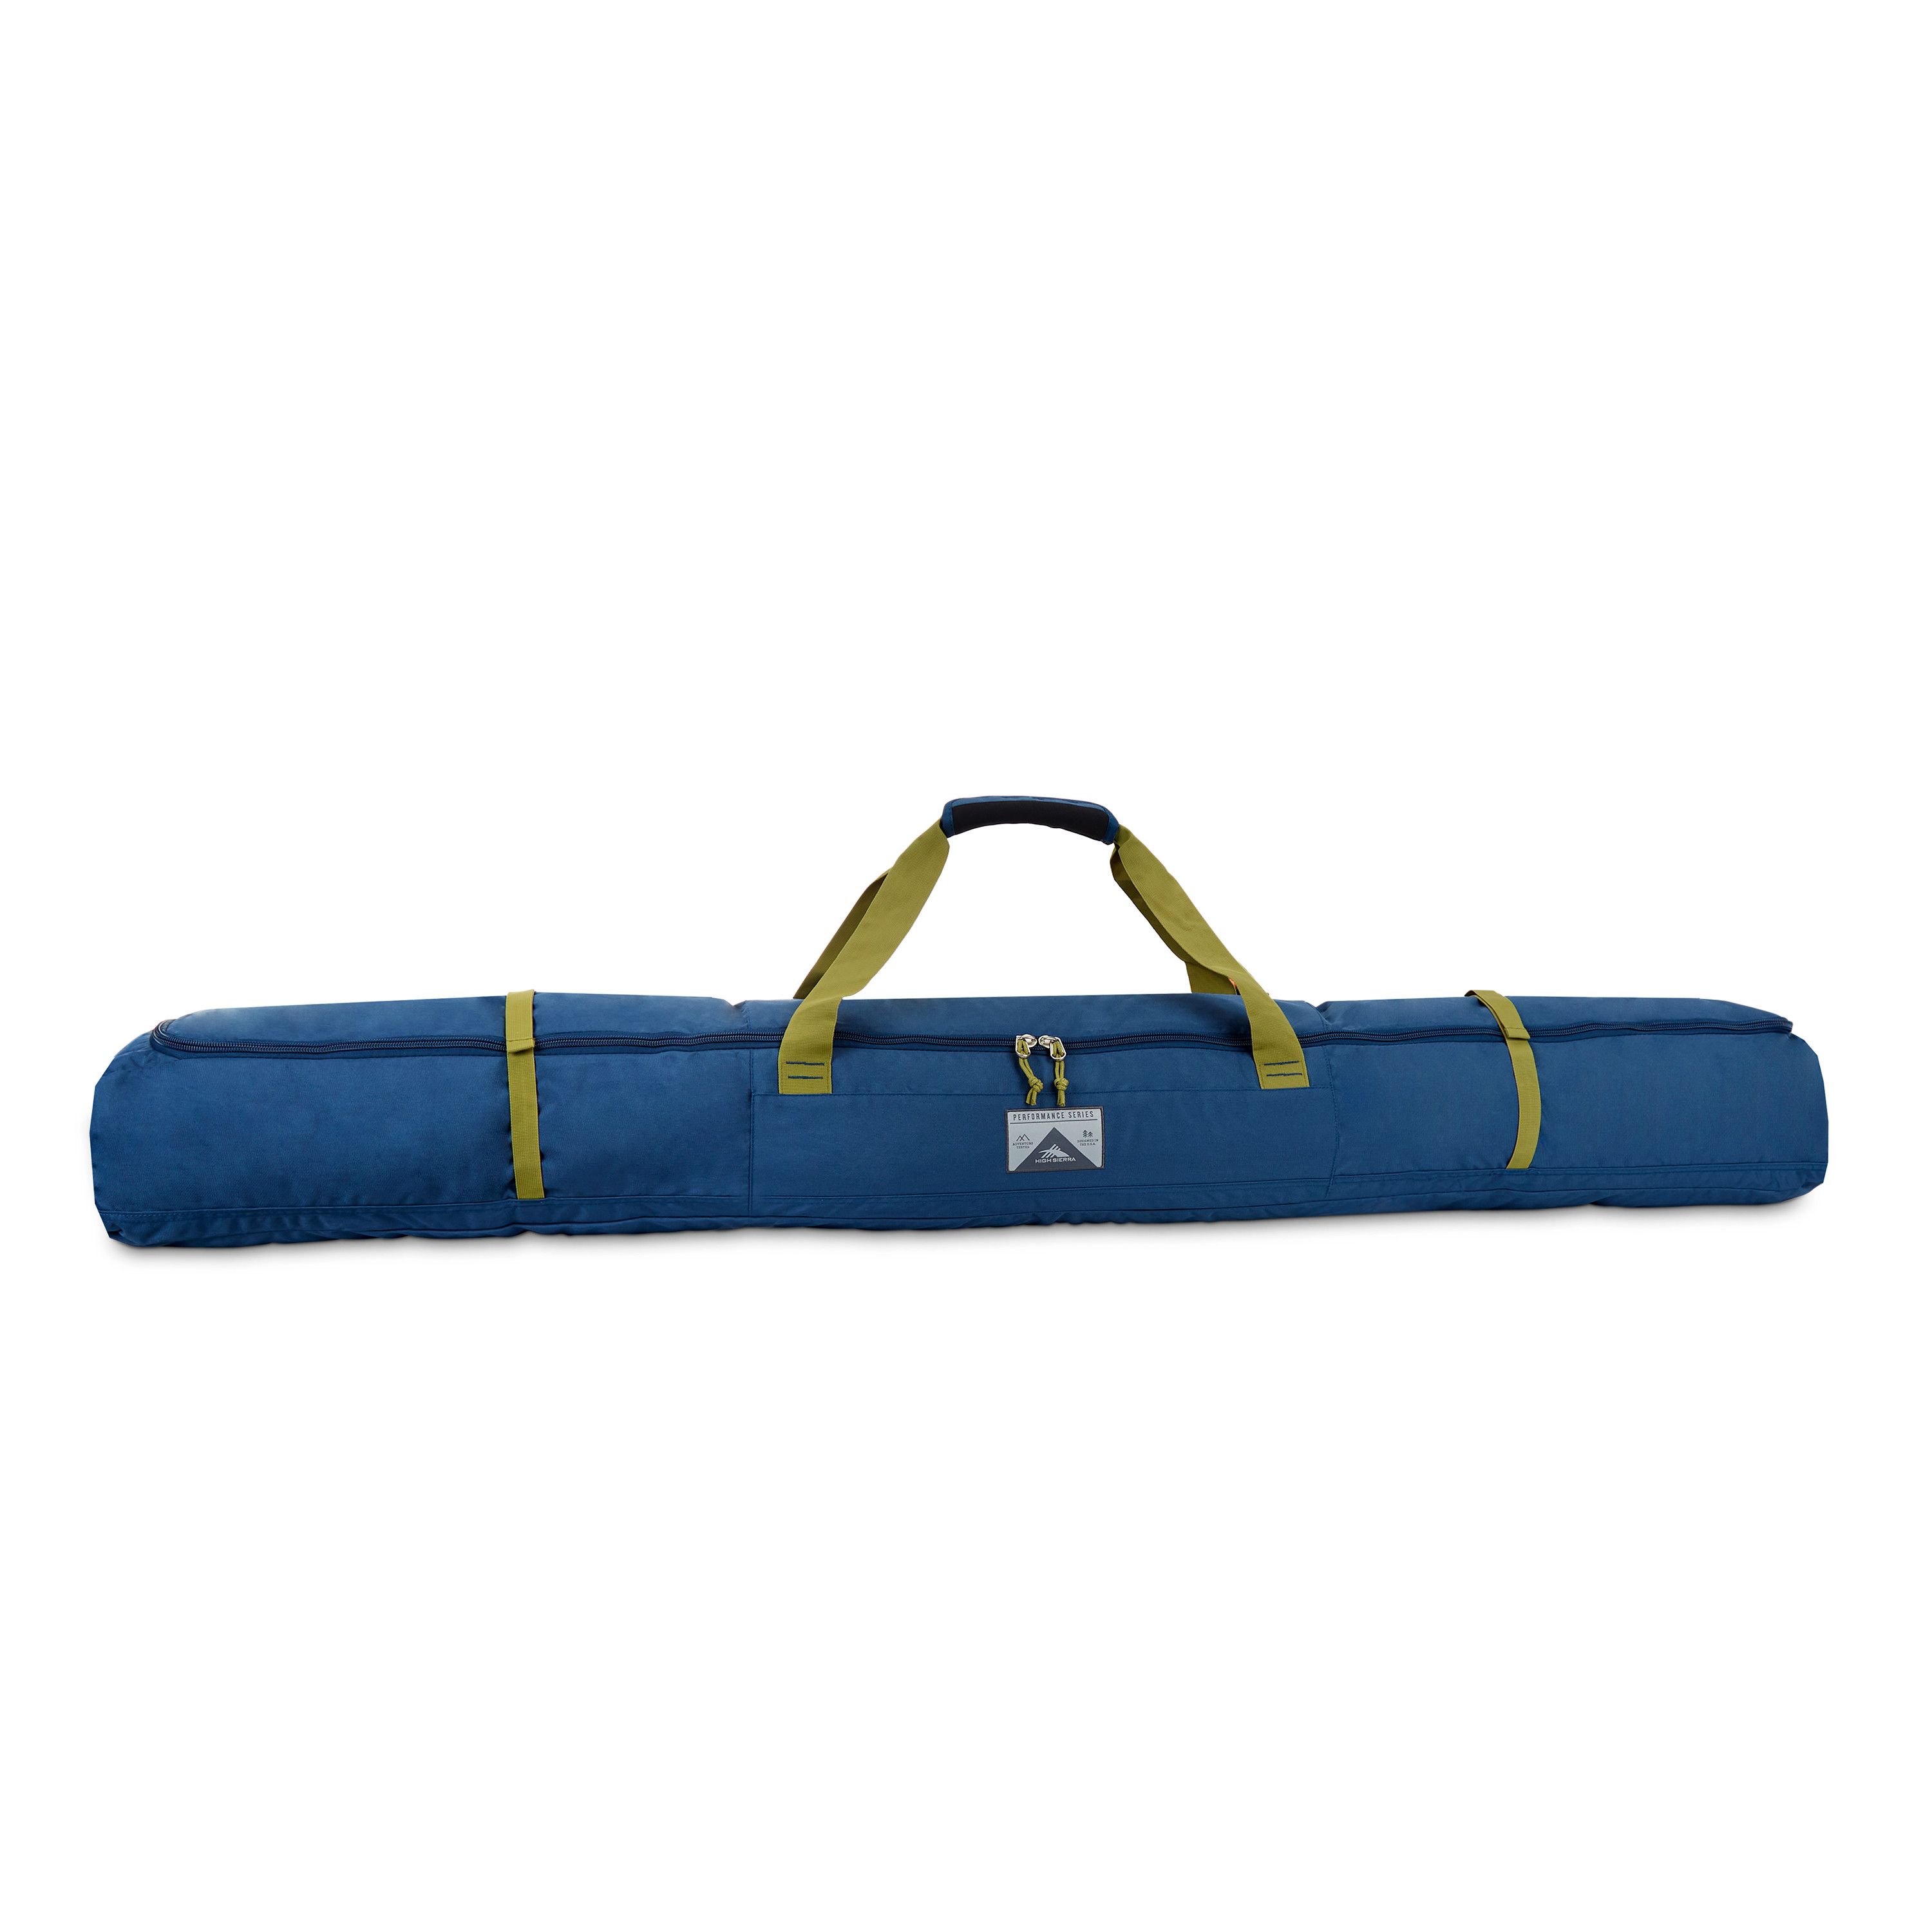 166x36cm Single Ski Bag Snowboard Bag Large Capacity Sacca Porta